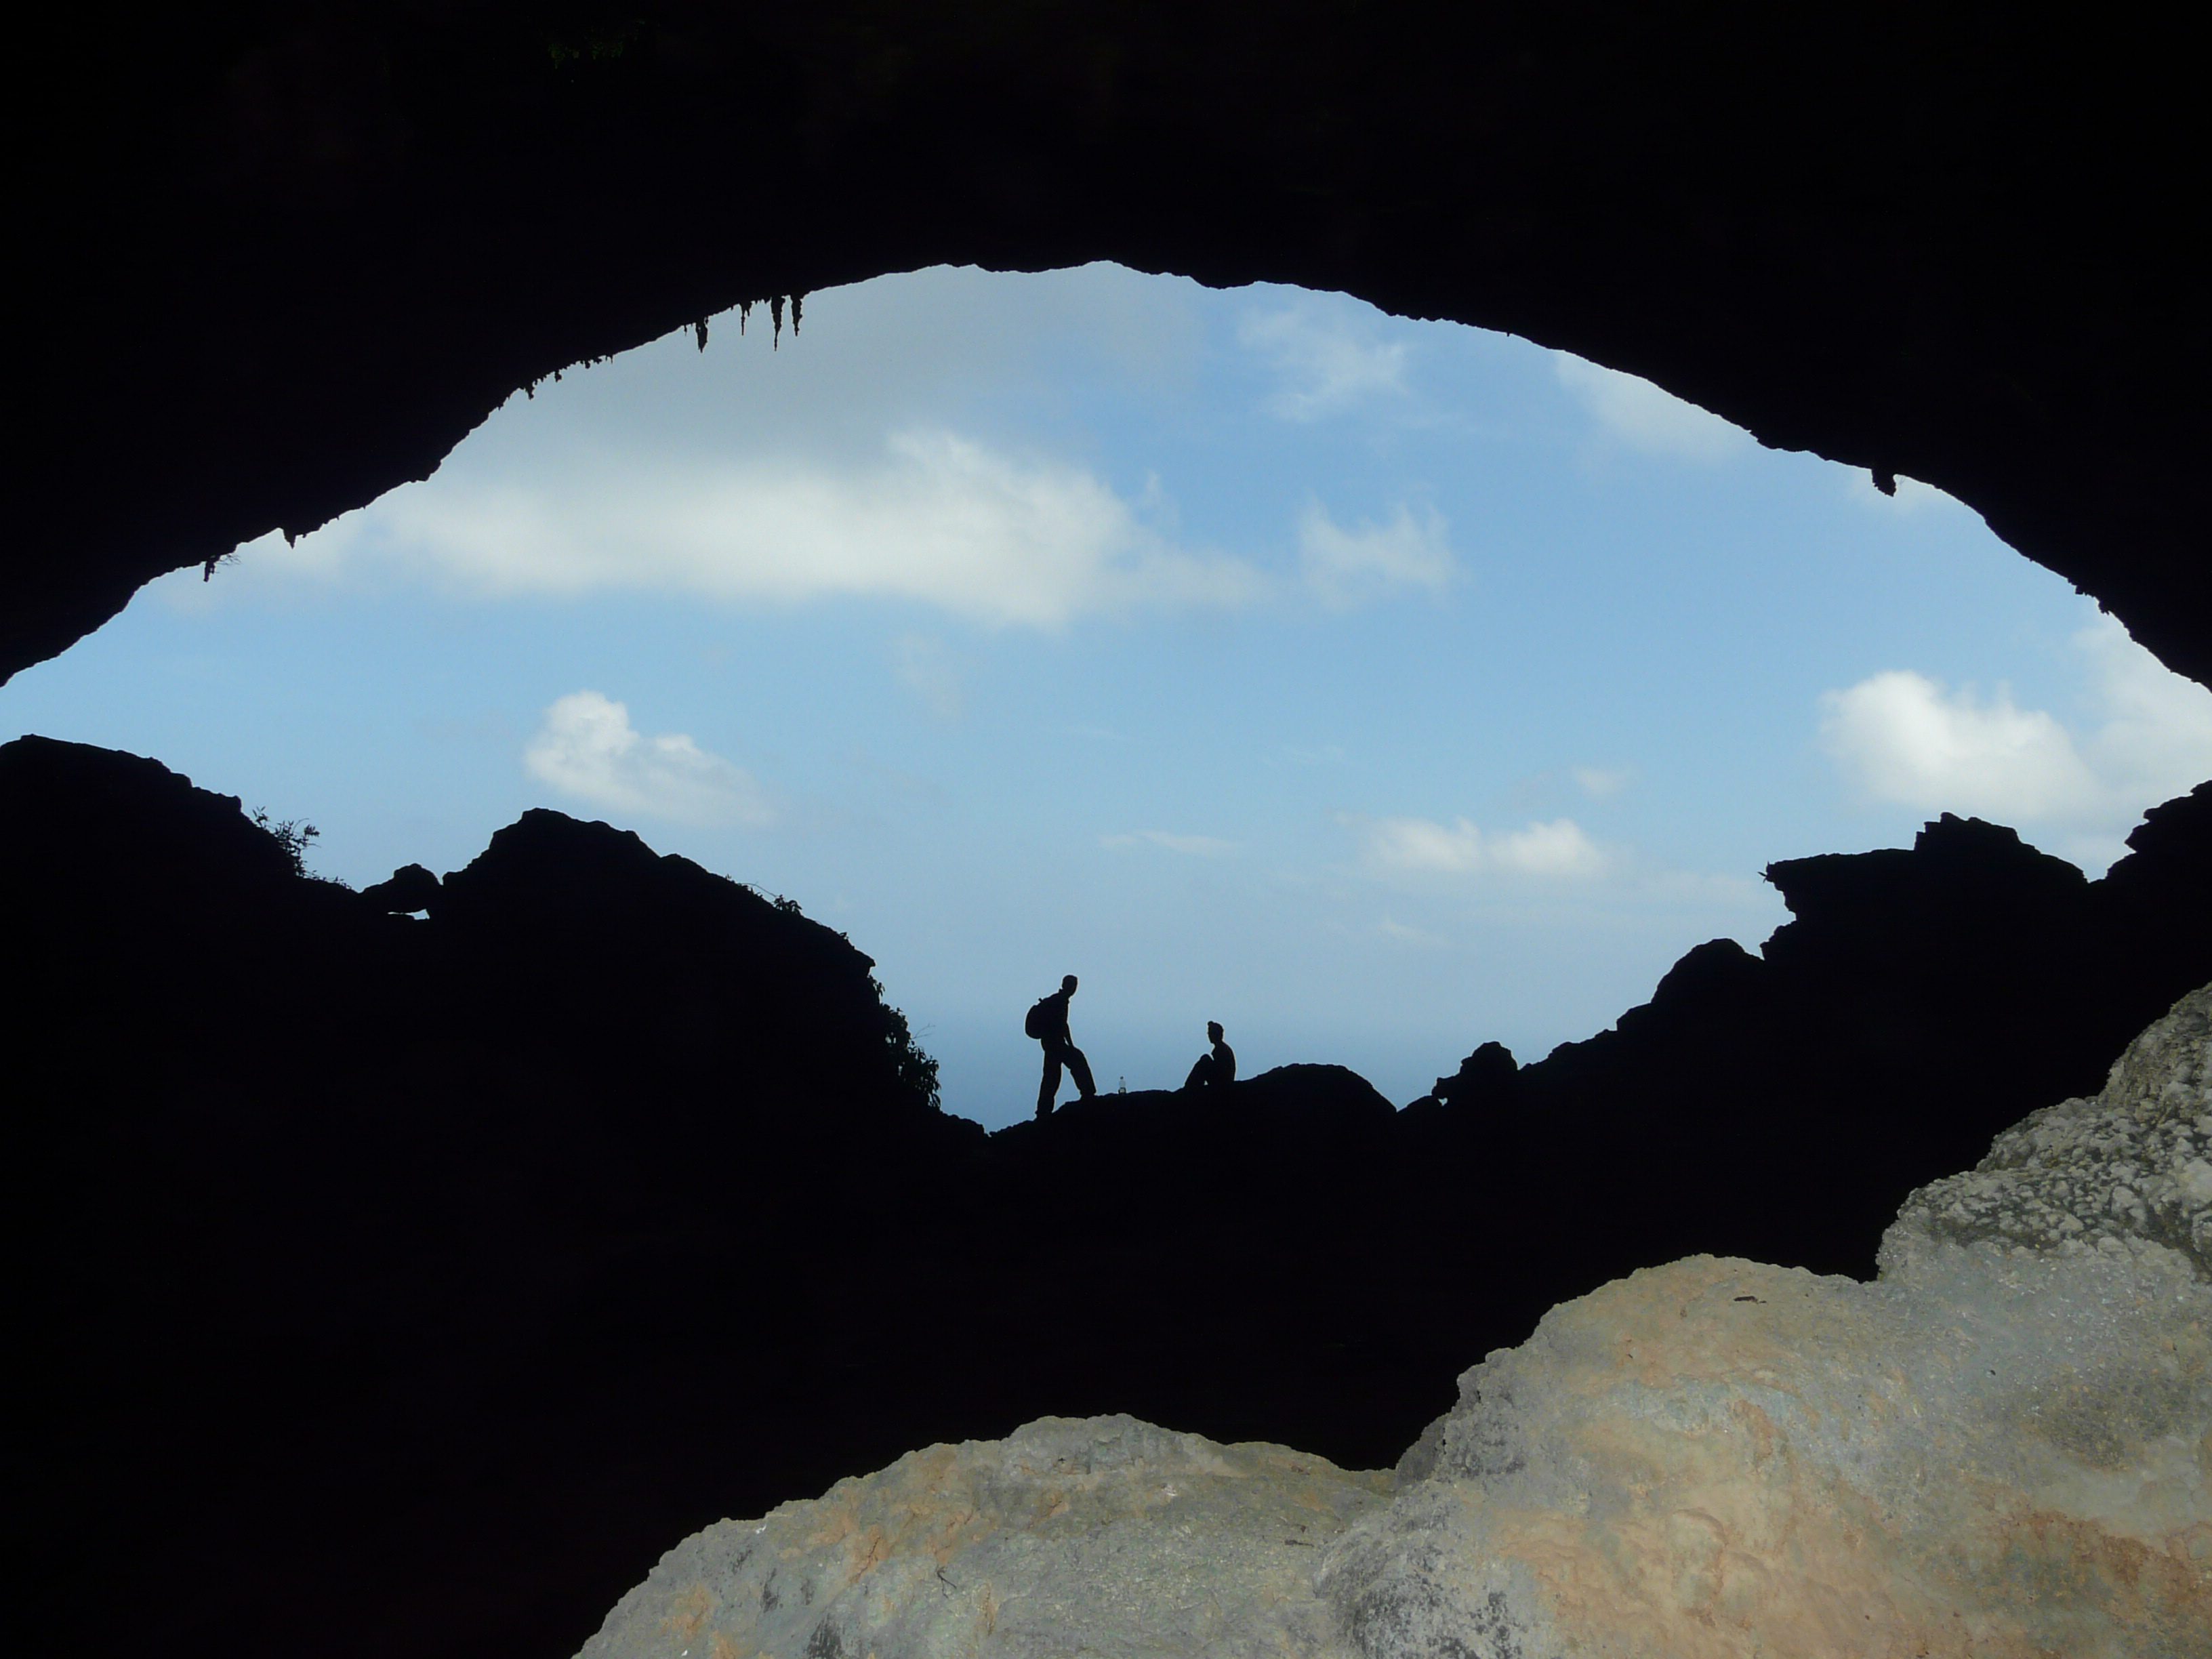 Hoq Cave big entrance from inside, Socotra Island